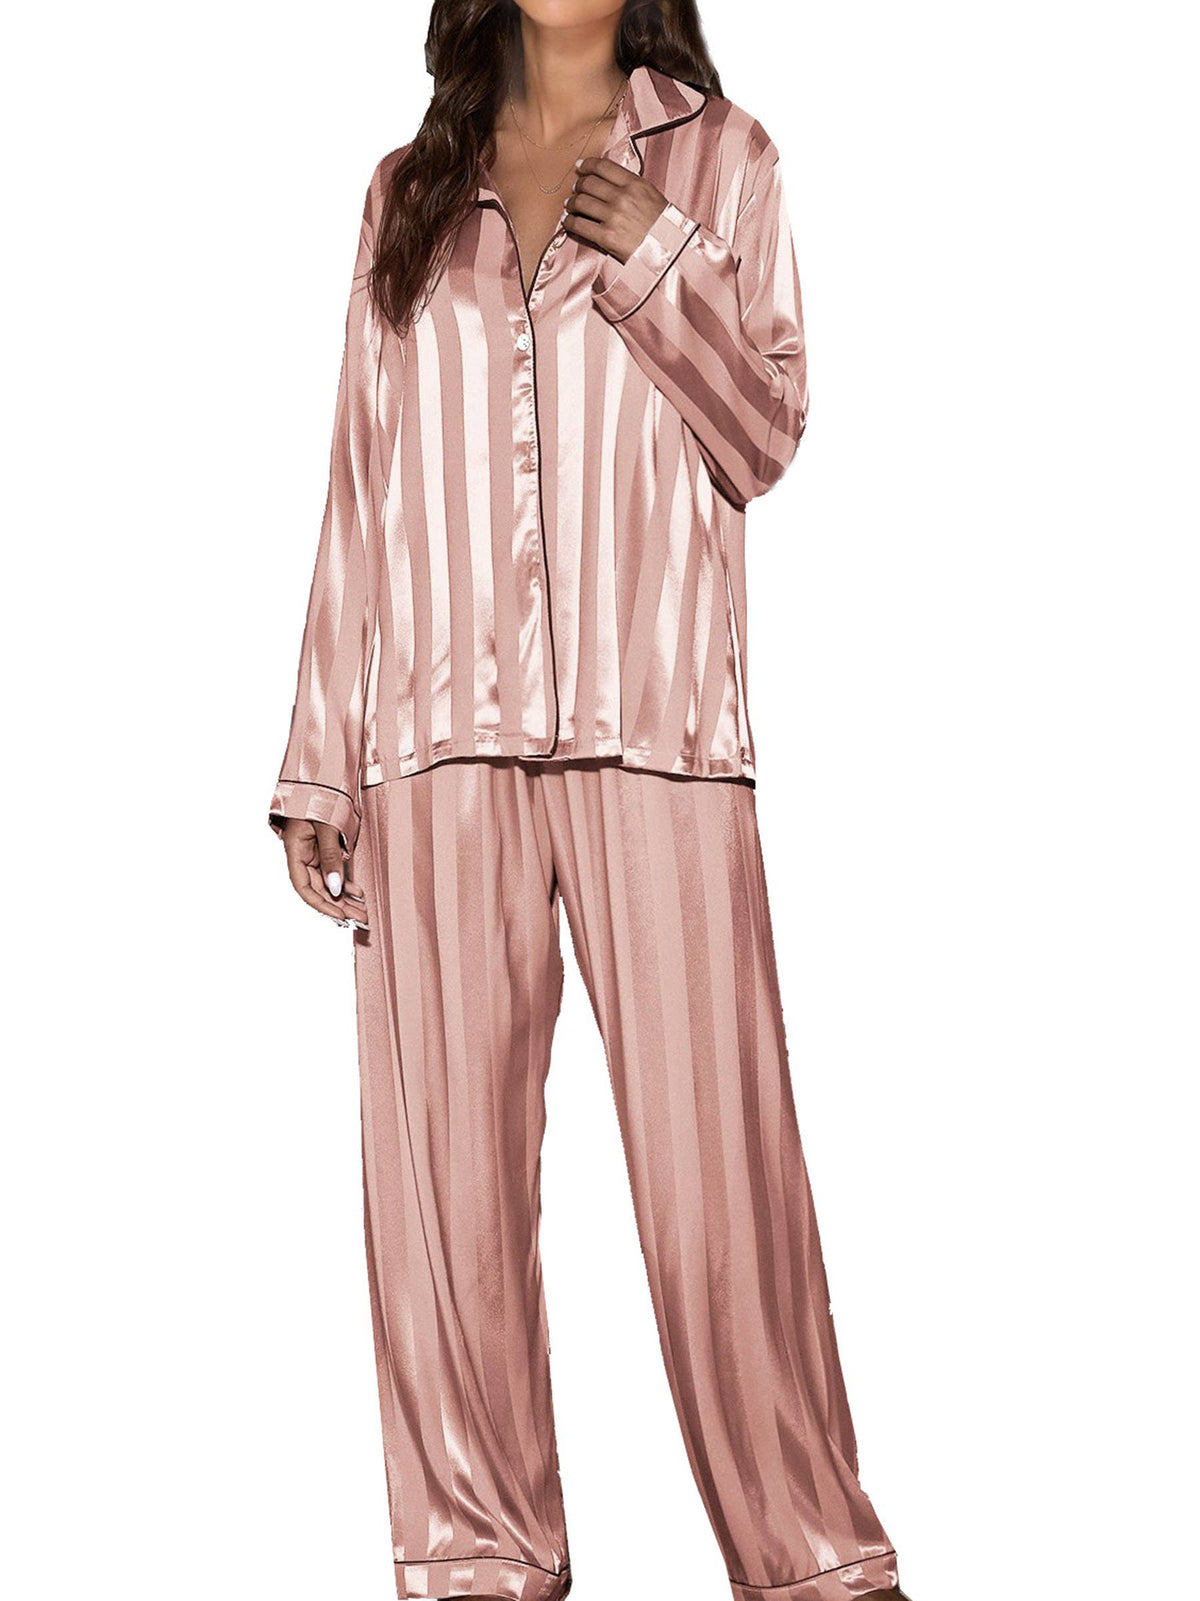 2 Piece Button Front Sleepwear Pants Set Loungewear: S / Pink